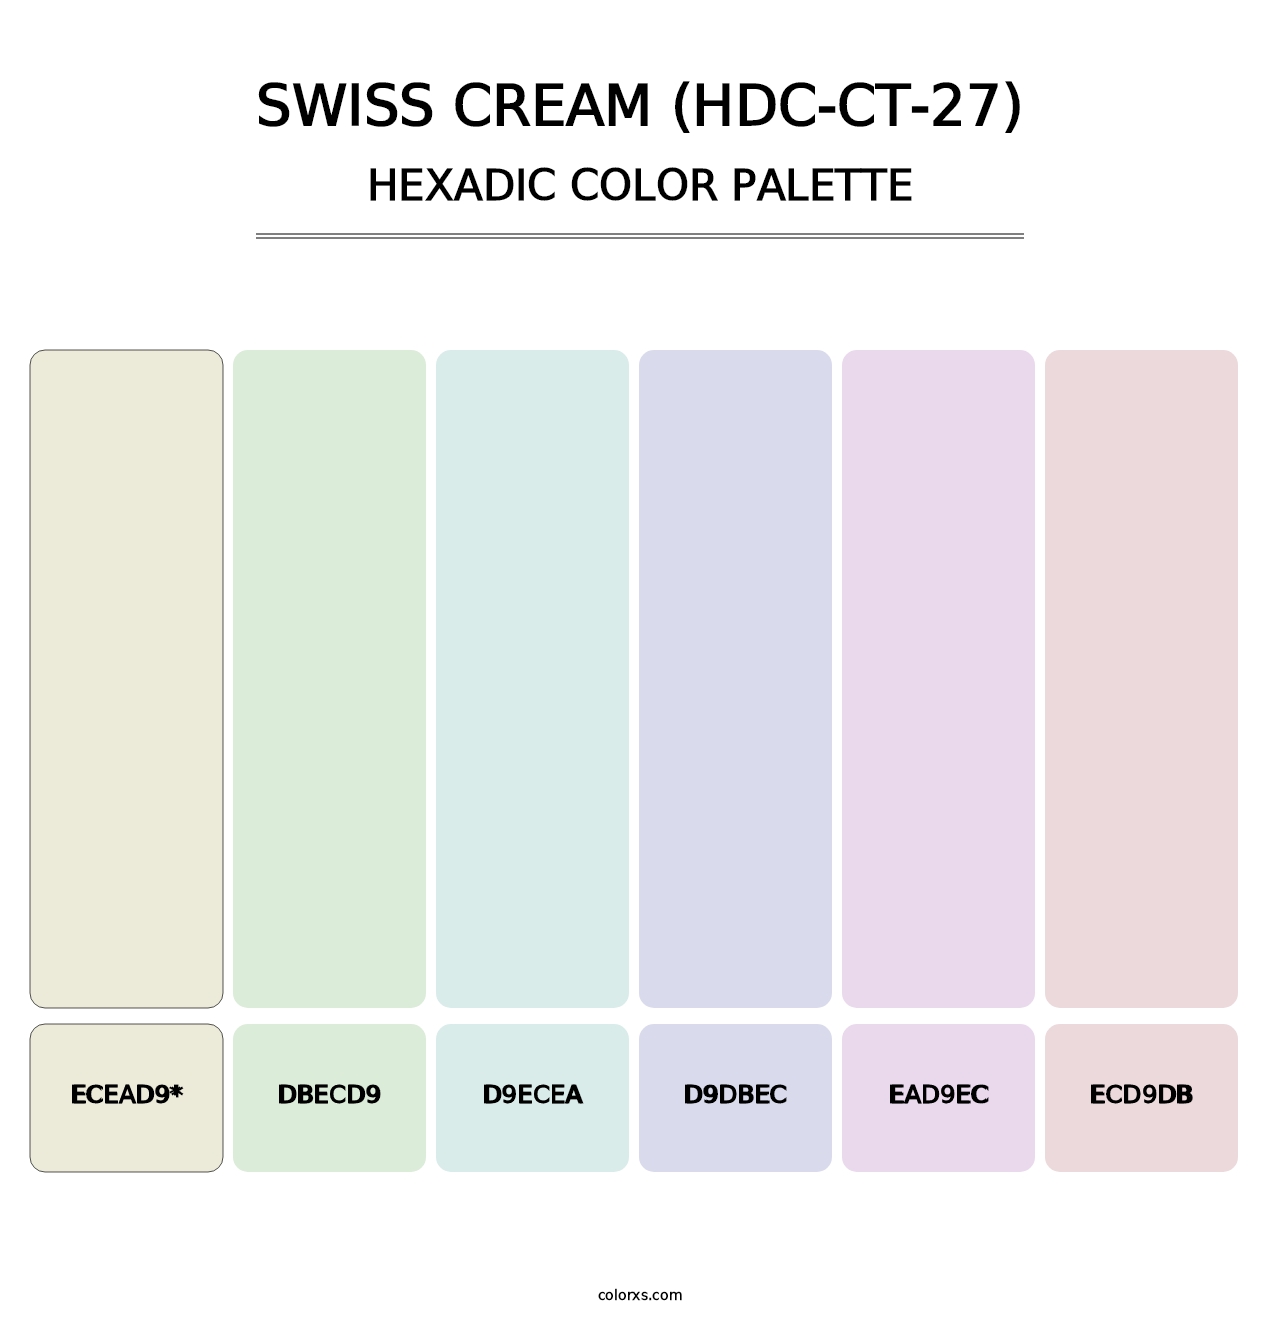 Swiss Cream (HDC-CT-27) - Hexadic Color Palette